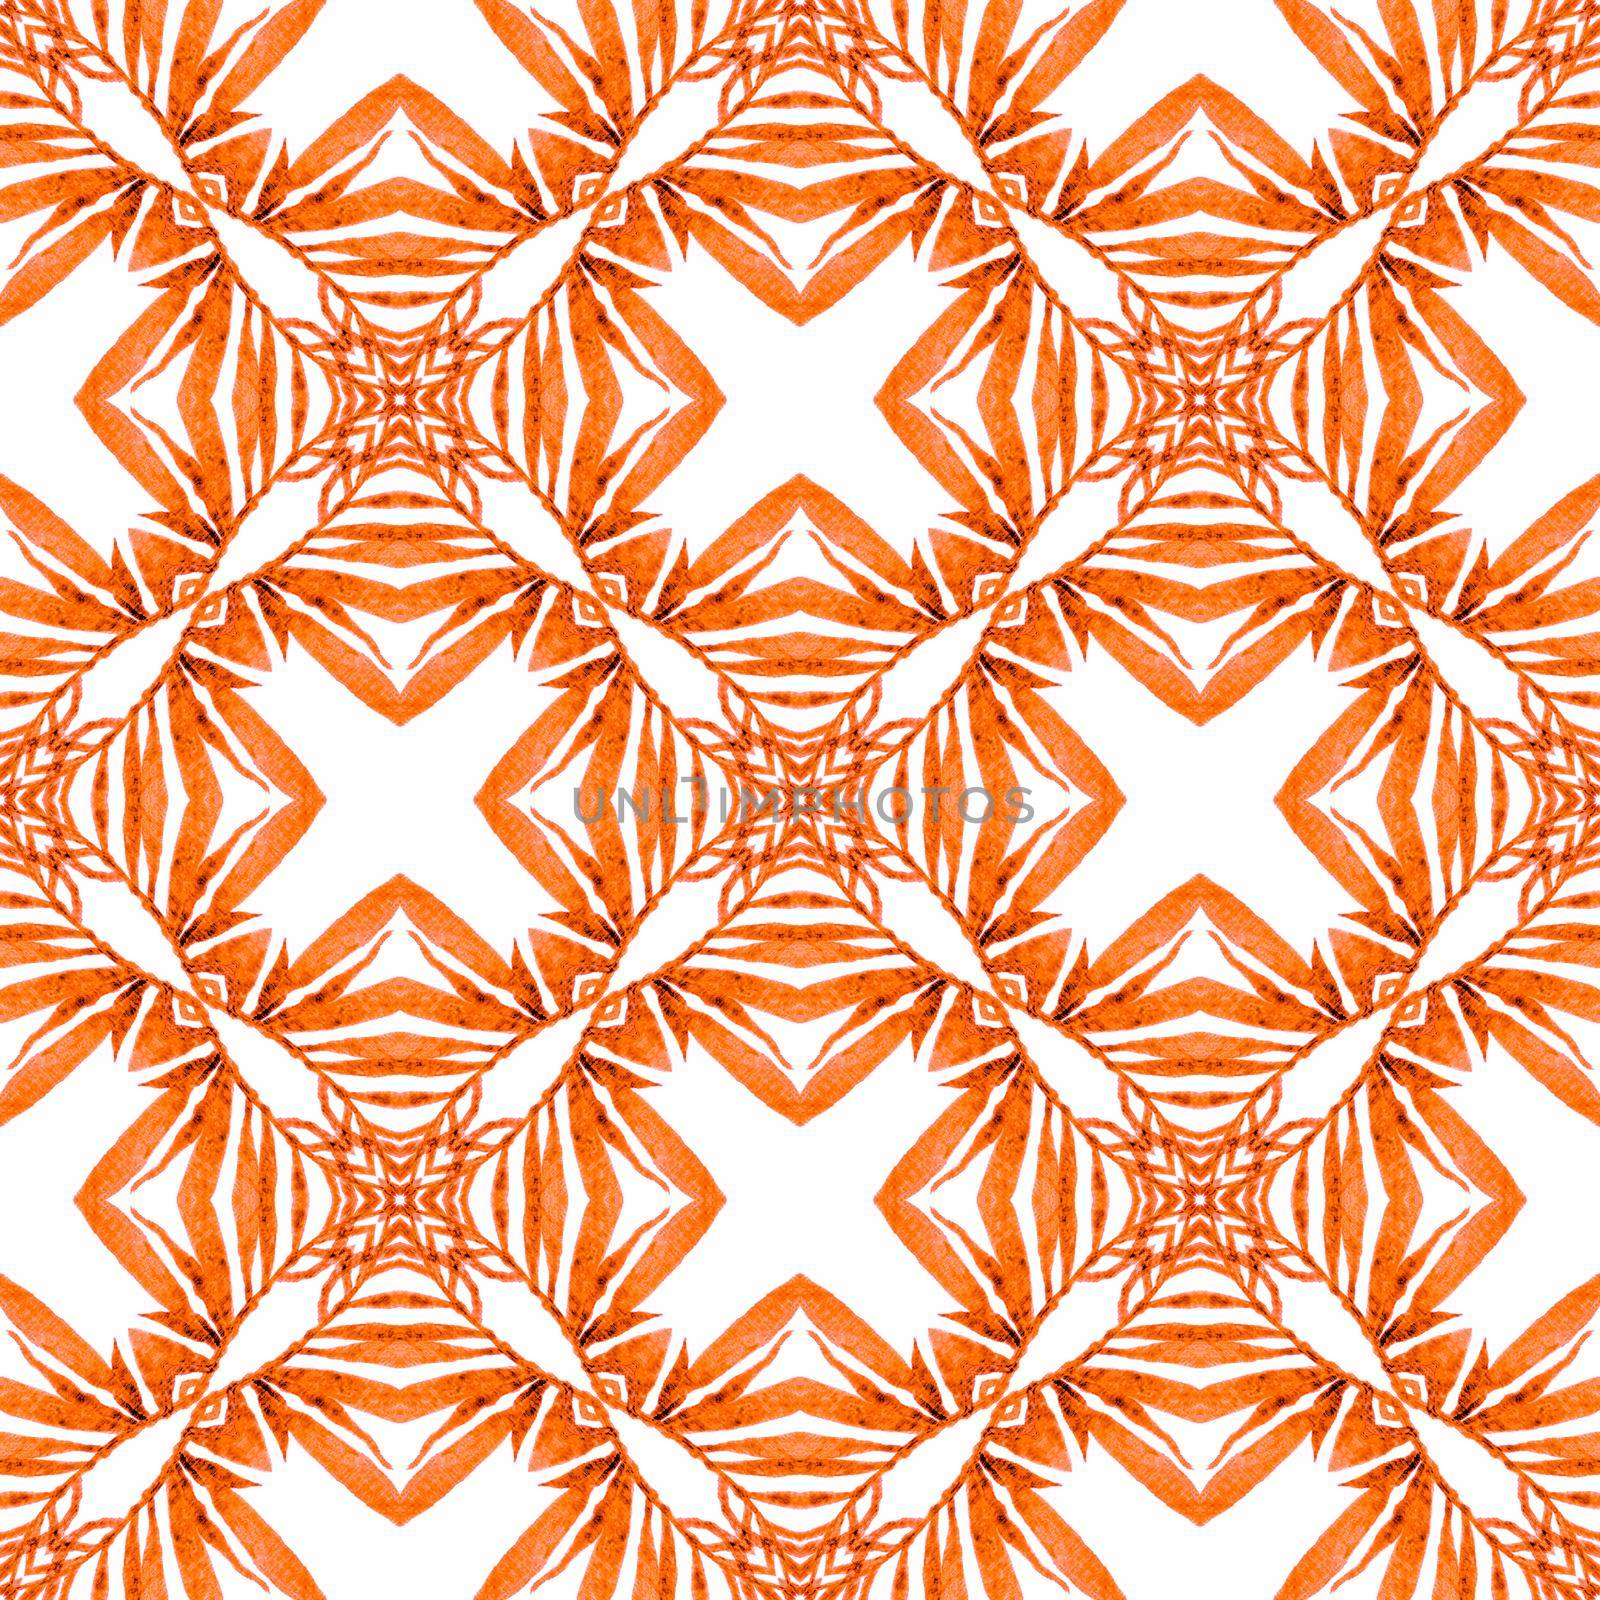 Textile ready extra print, swimwear fabric, wallpaper, wrapping. Orange worthy boho chic summer design. Repeating striped hand drawn border. Striped hand drawn design.